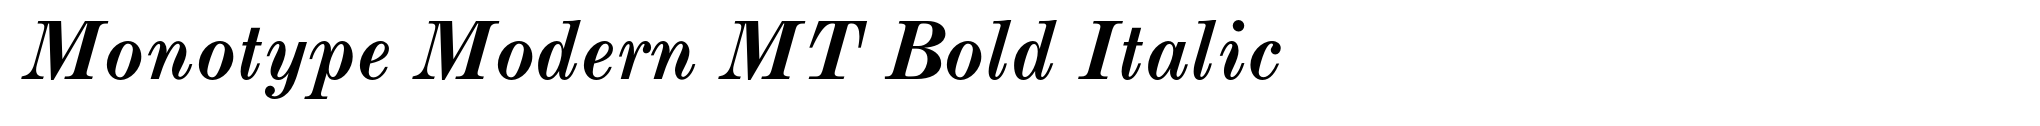 Monotype Modern MT Bold Italic image